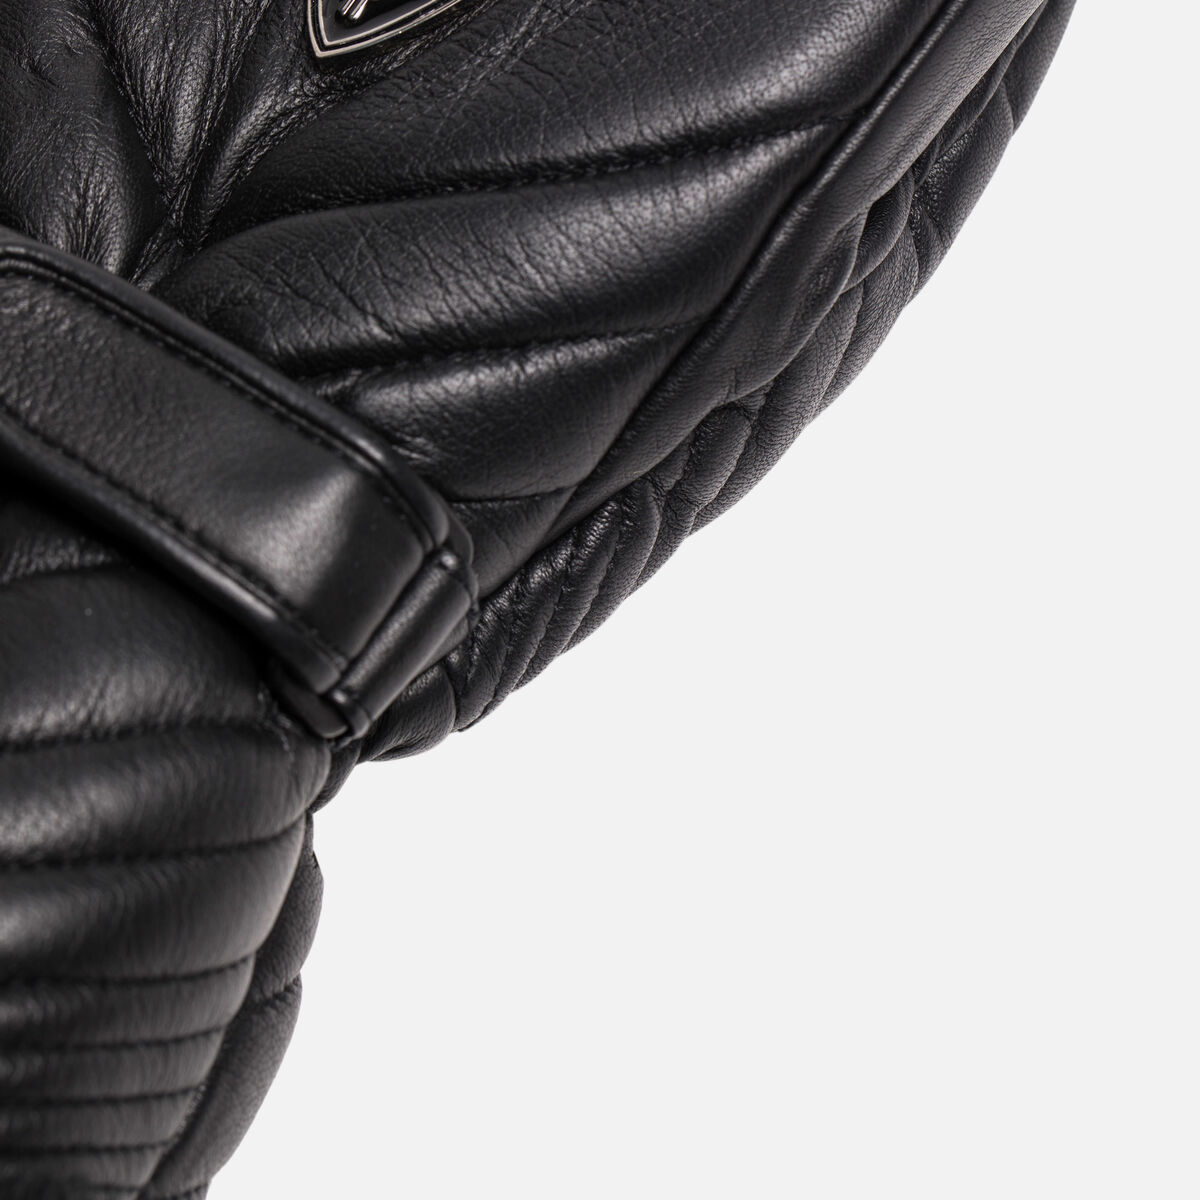 Rossignol Women's Select Leather Waterproof Ski Mittens Black